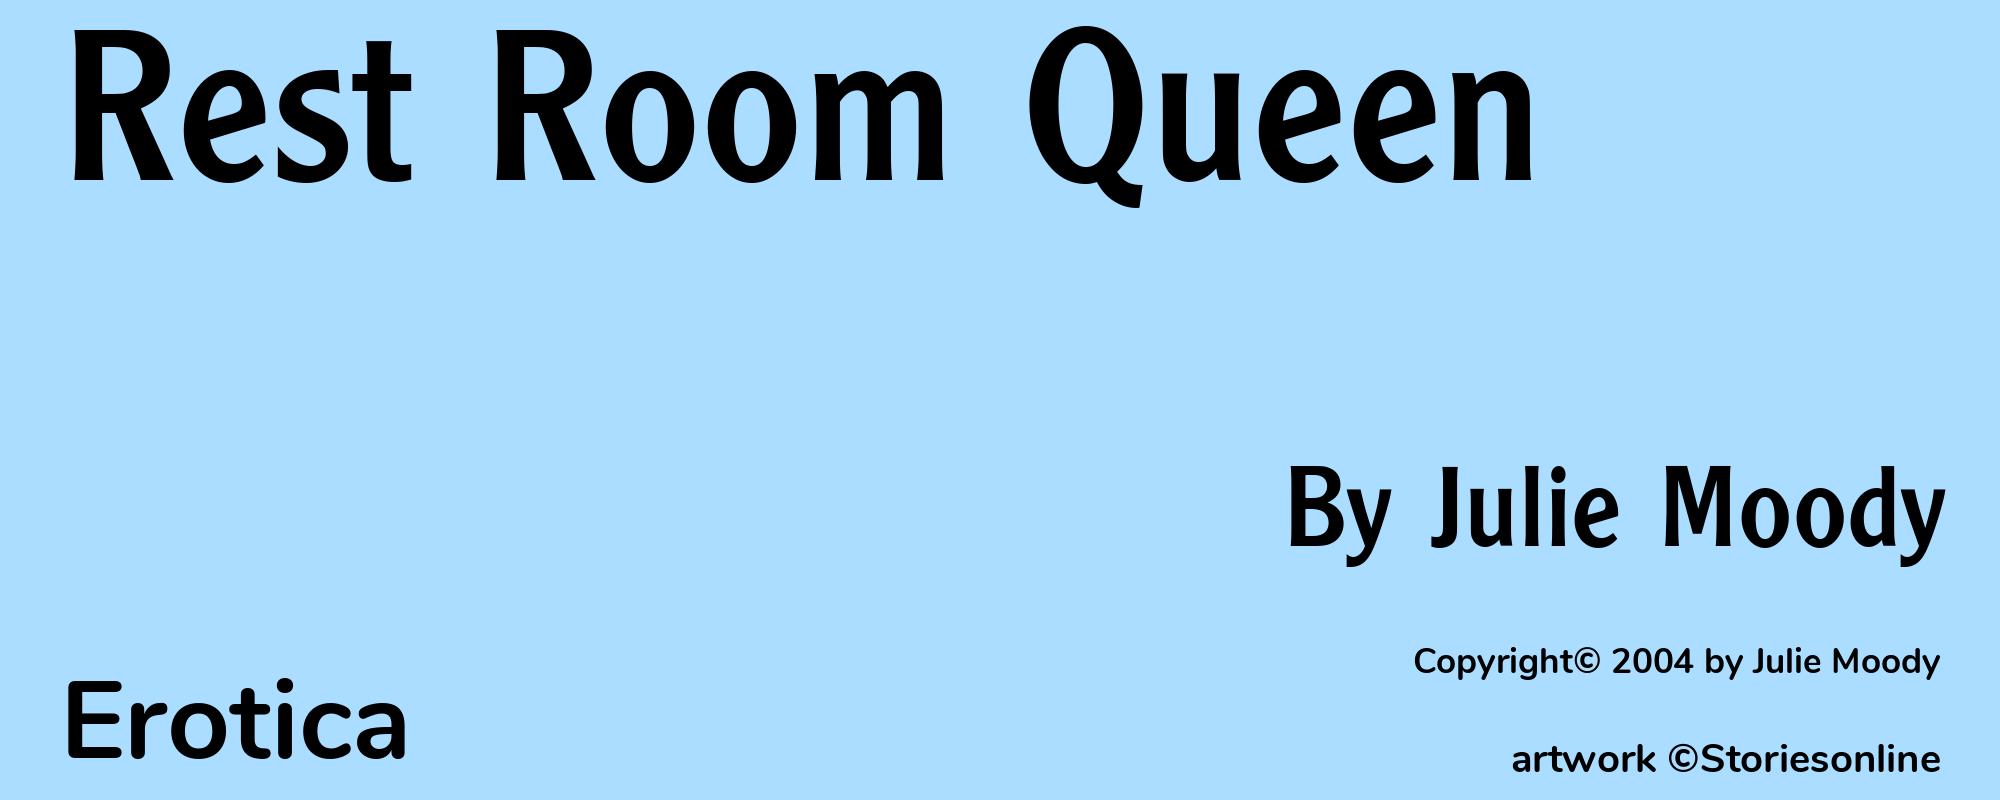 Rest Room Queen - Cover